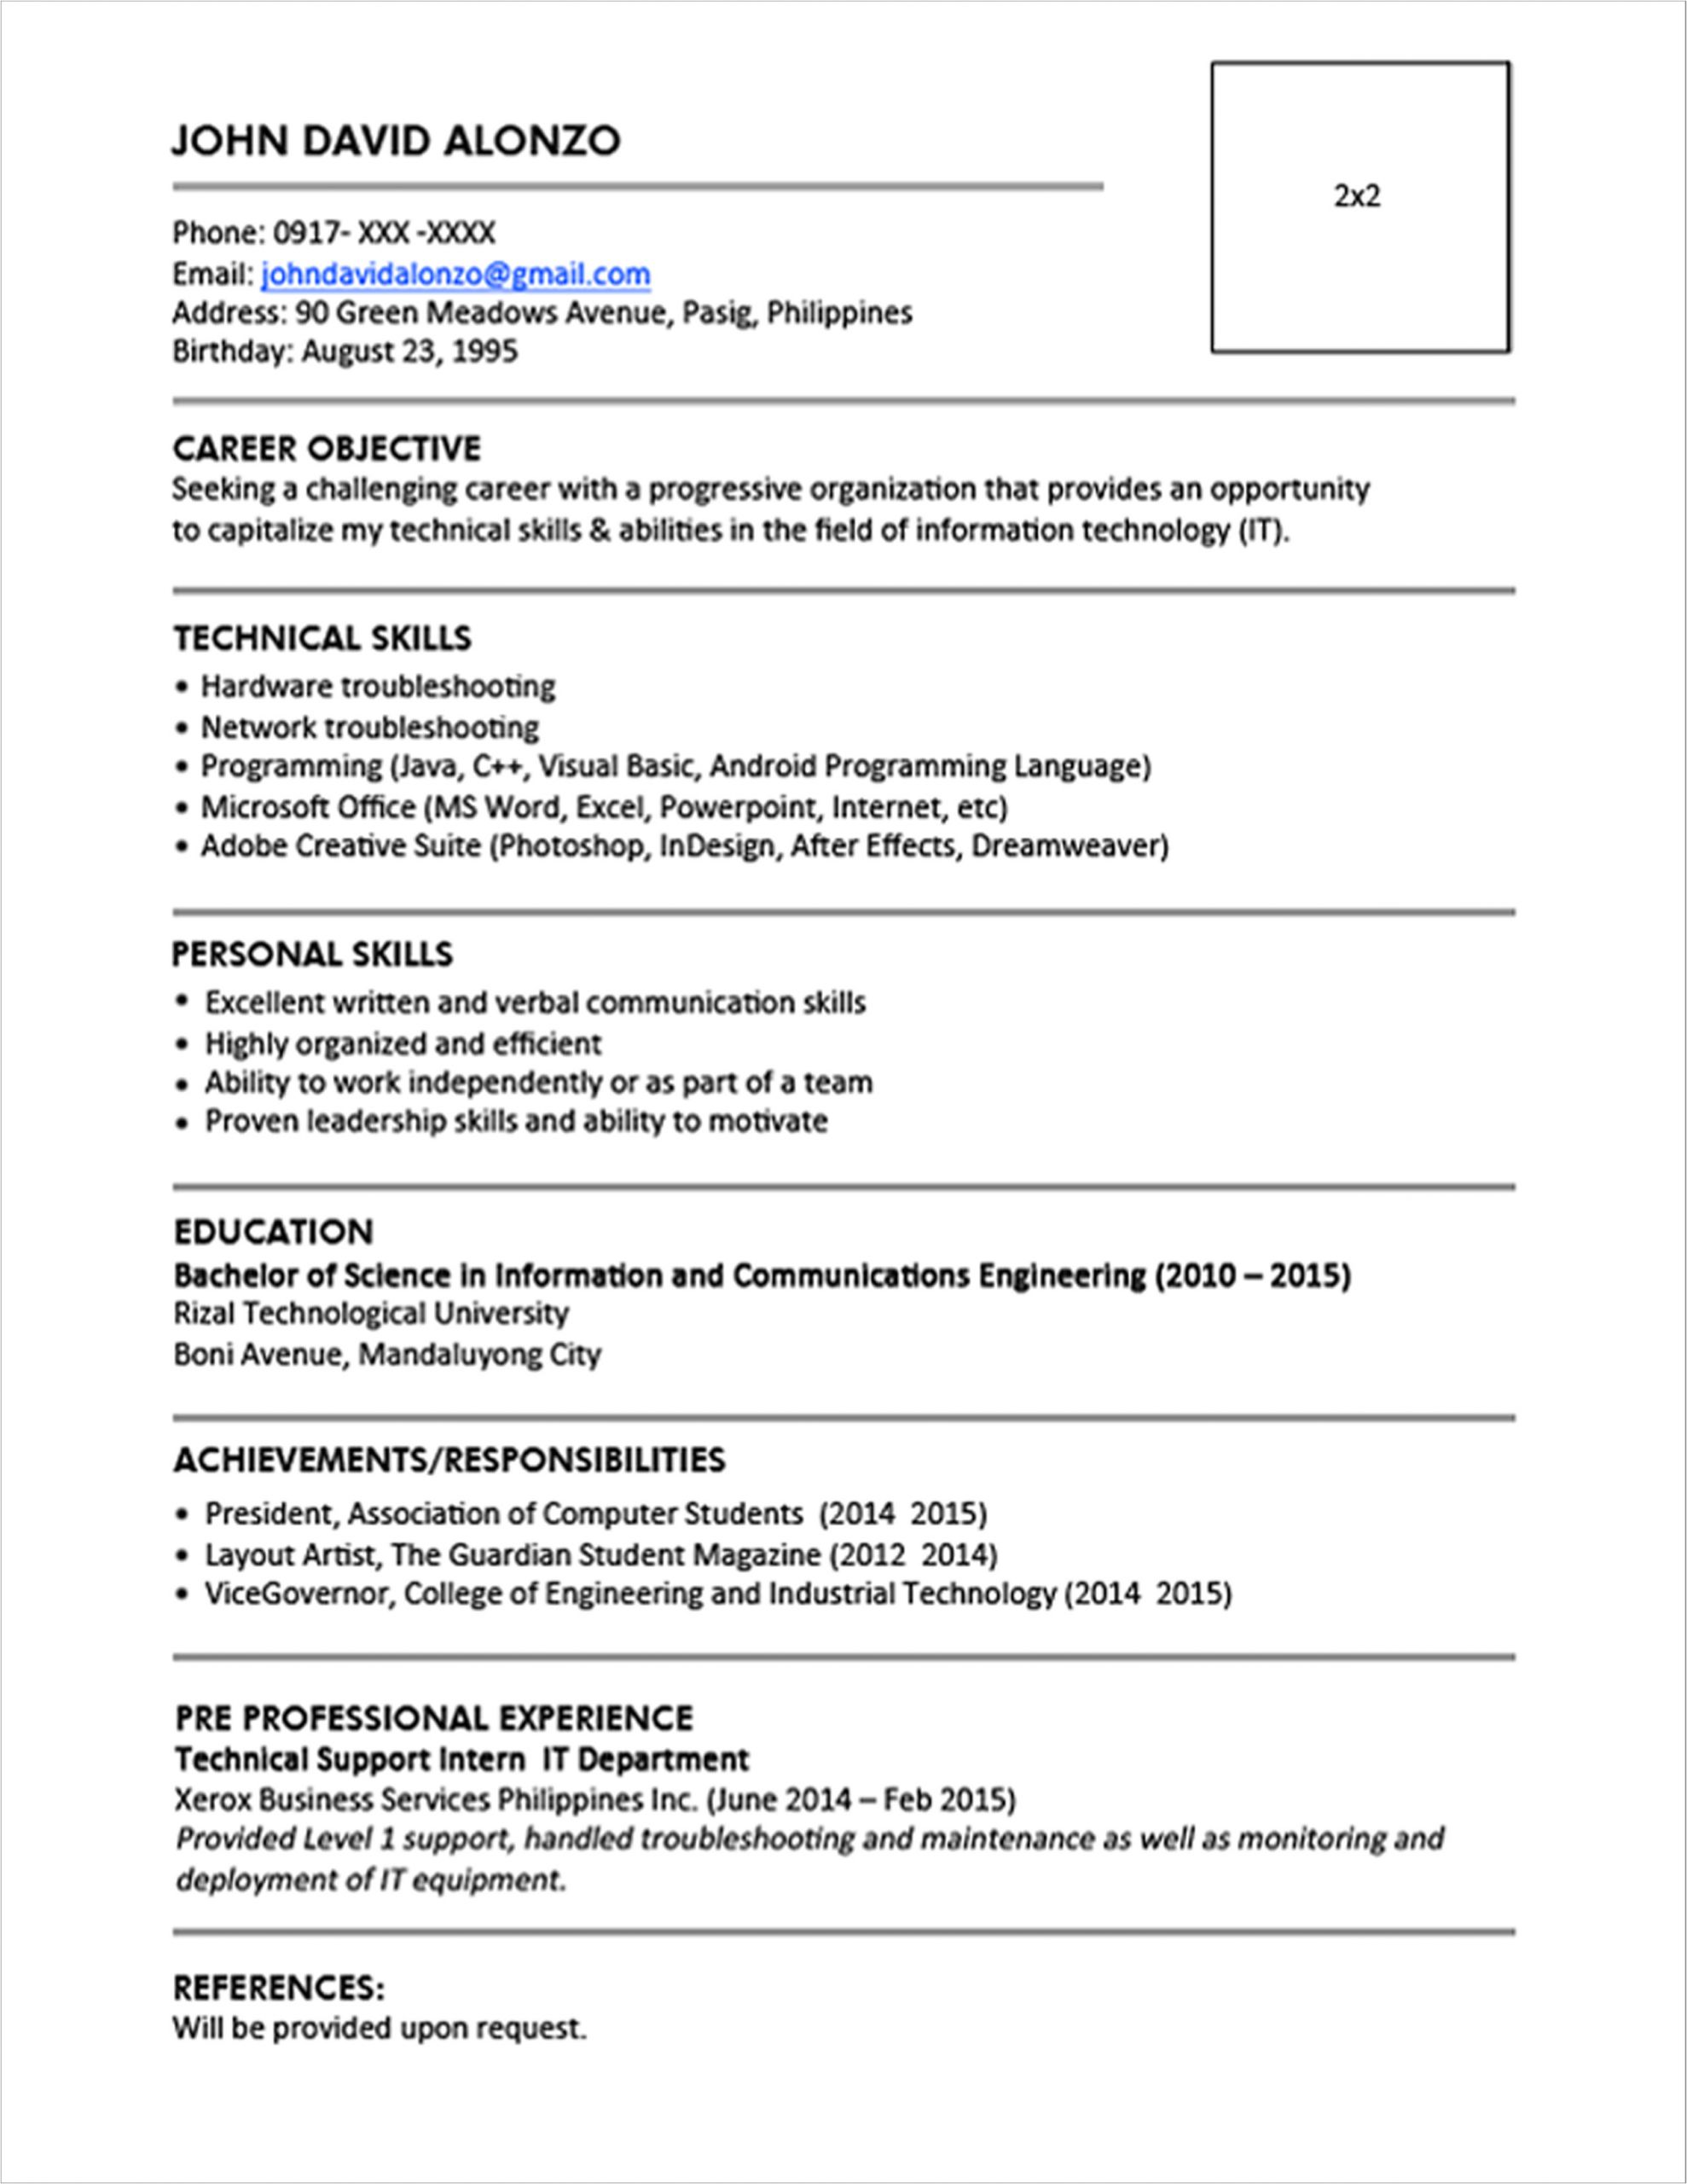 Basic Resume Philippines williamsonga.us